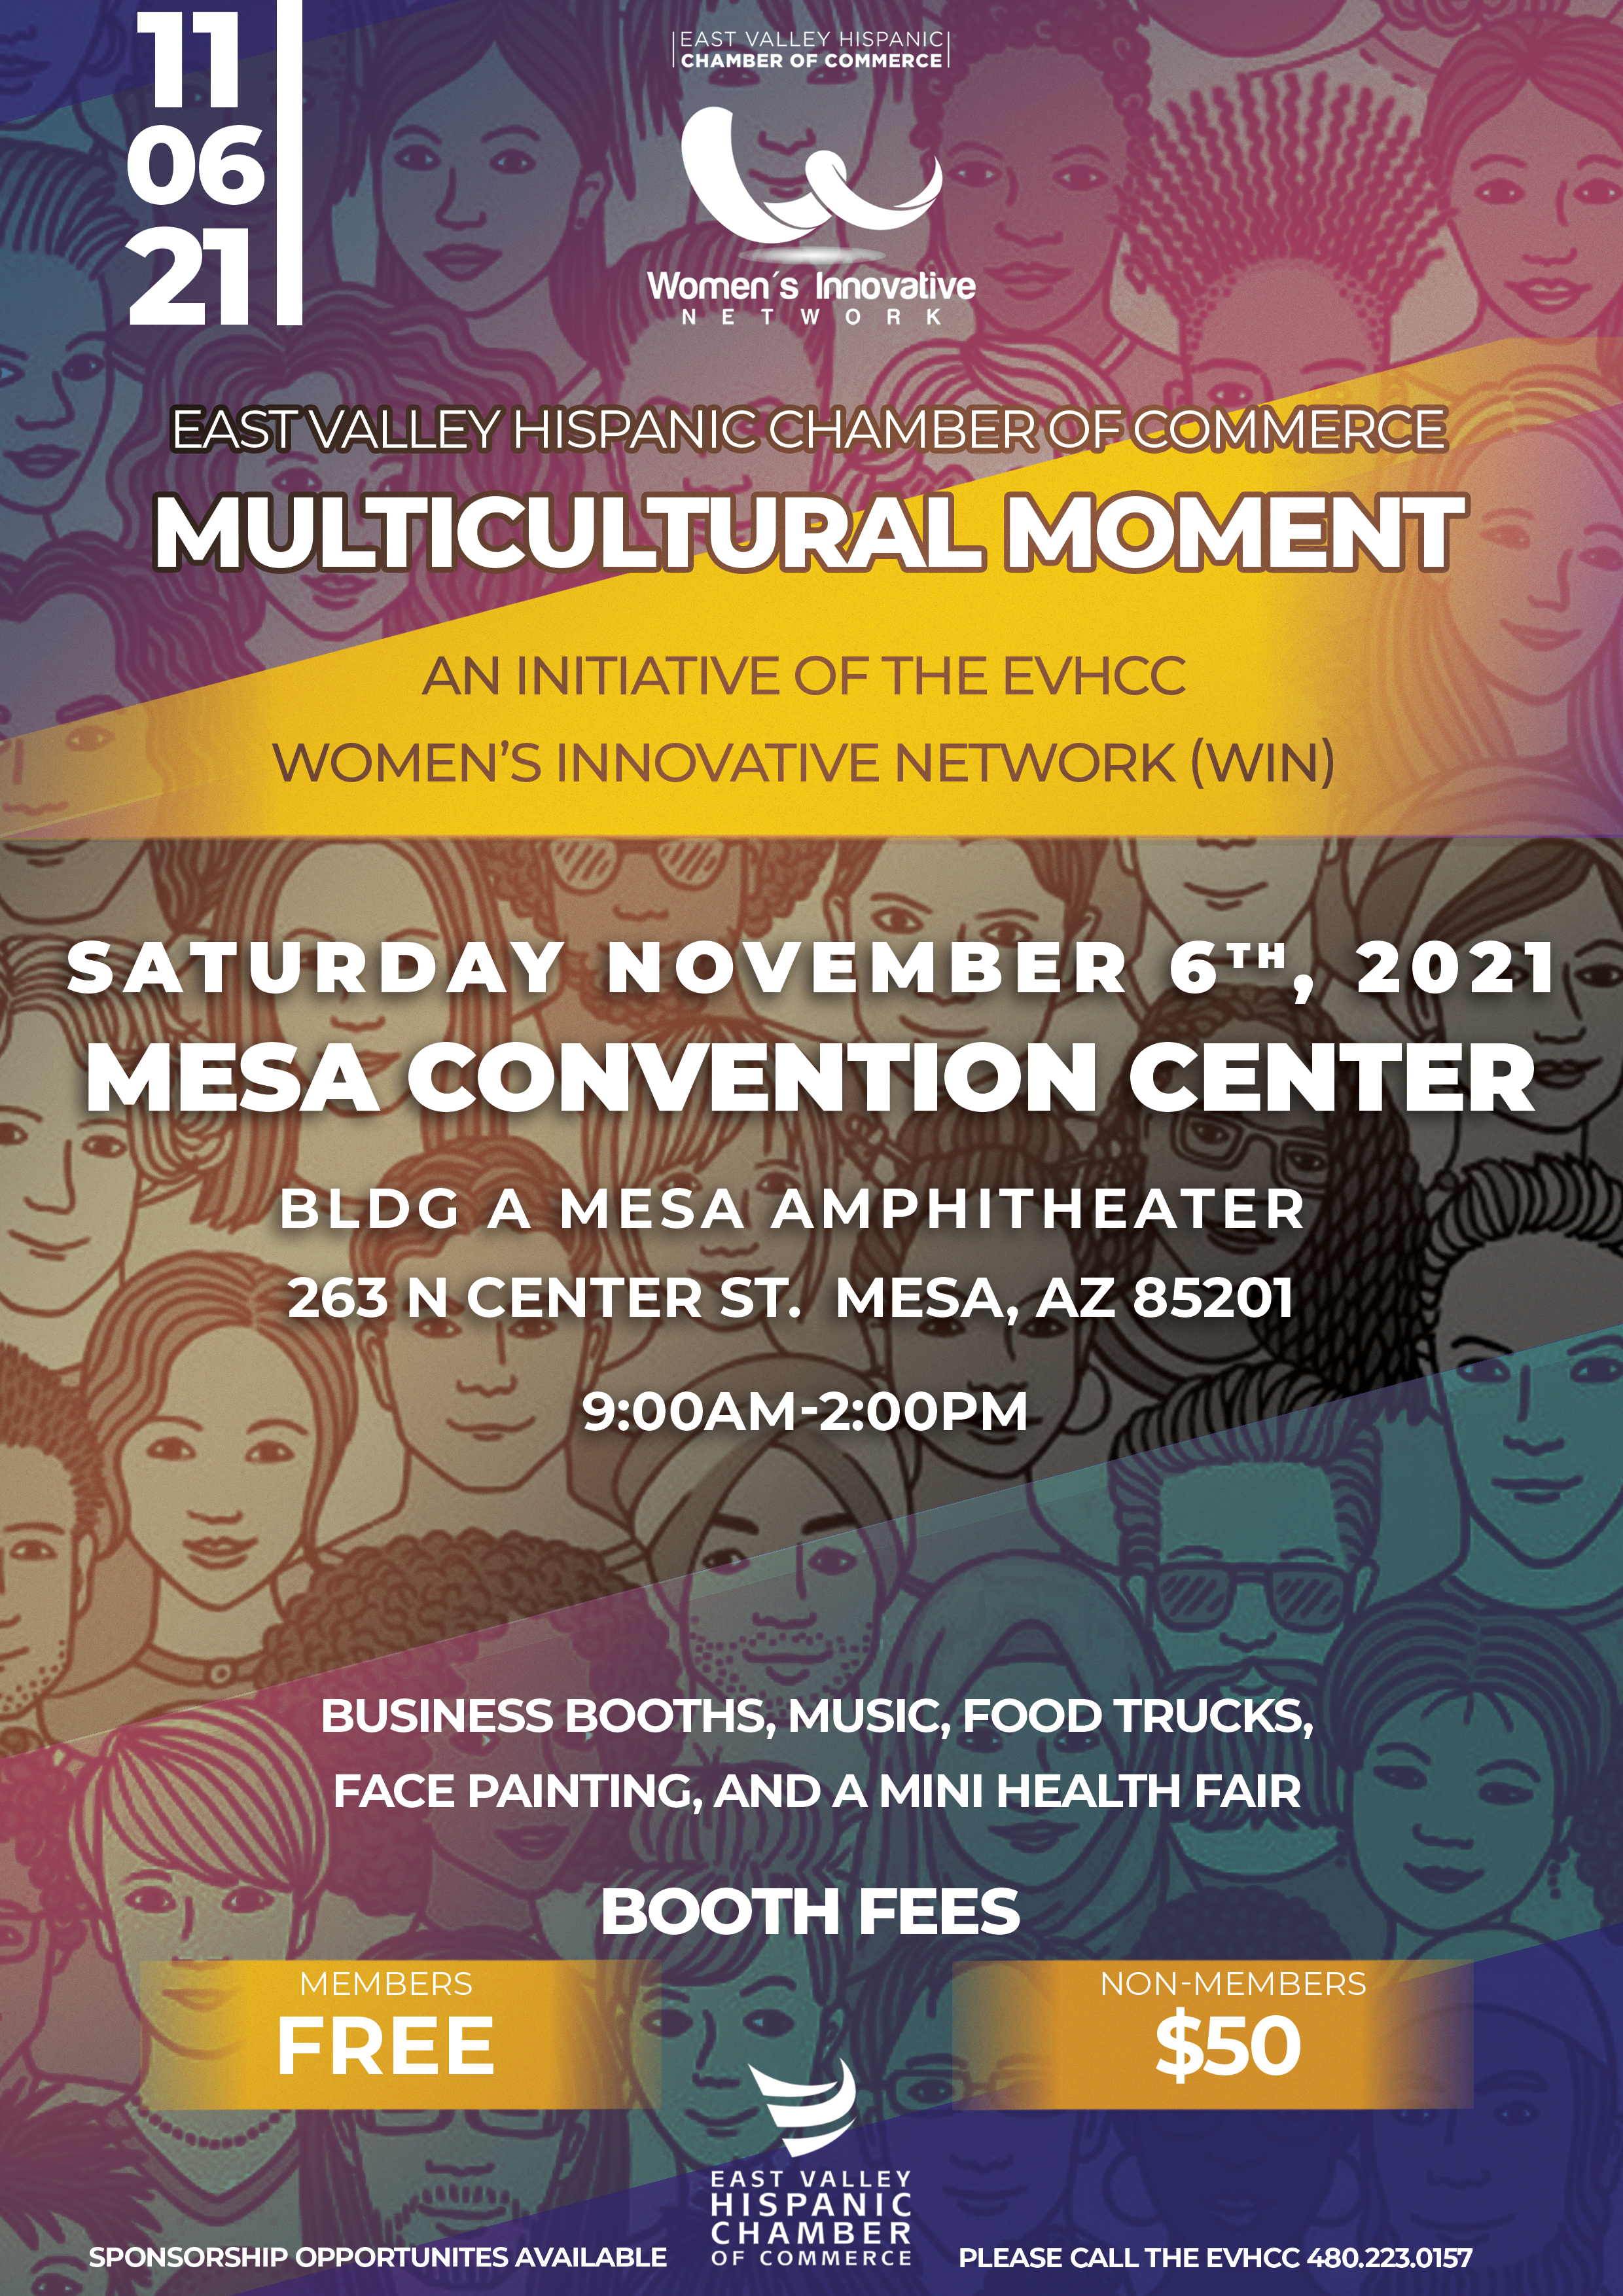 Momento Multicultural por EVHCC - 6 de noviembre de 2021 